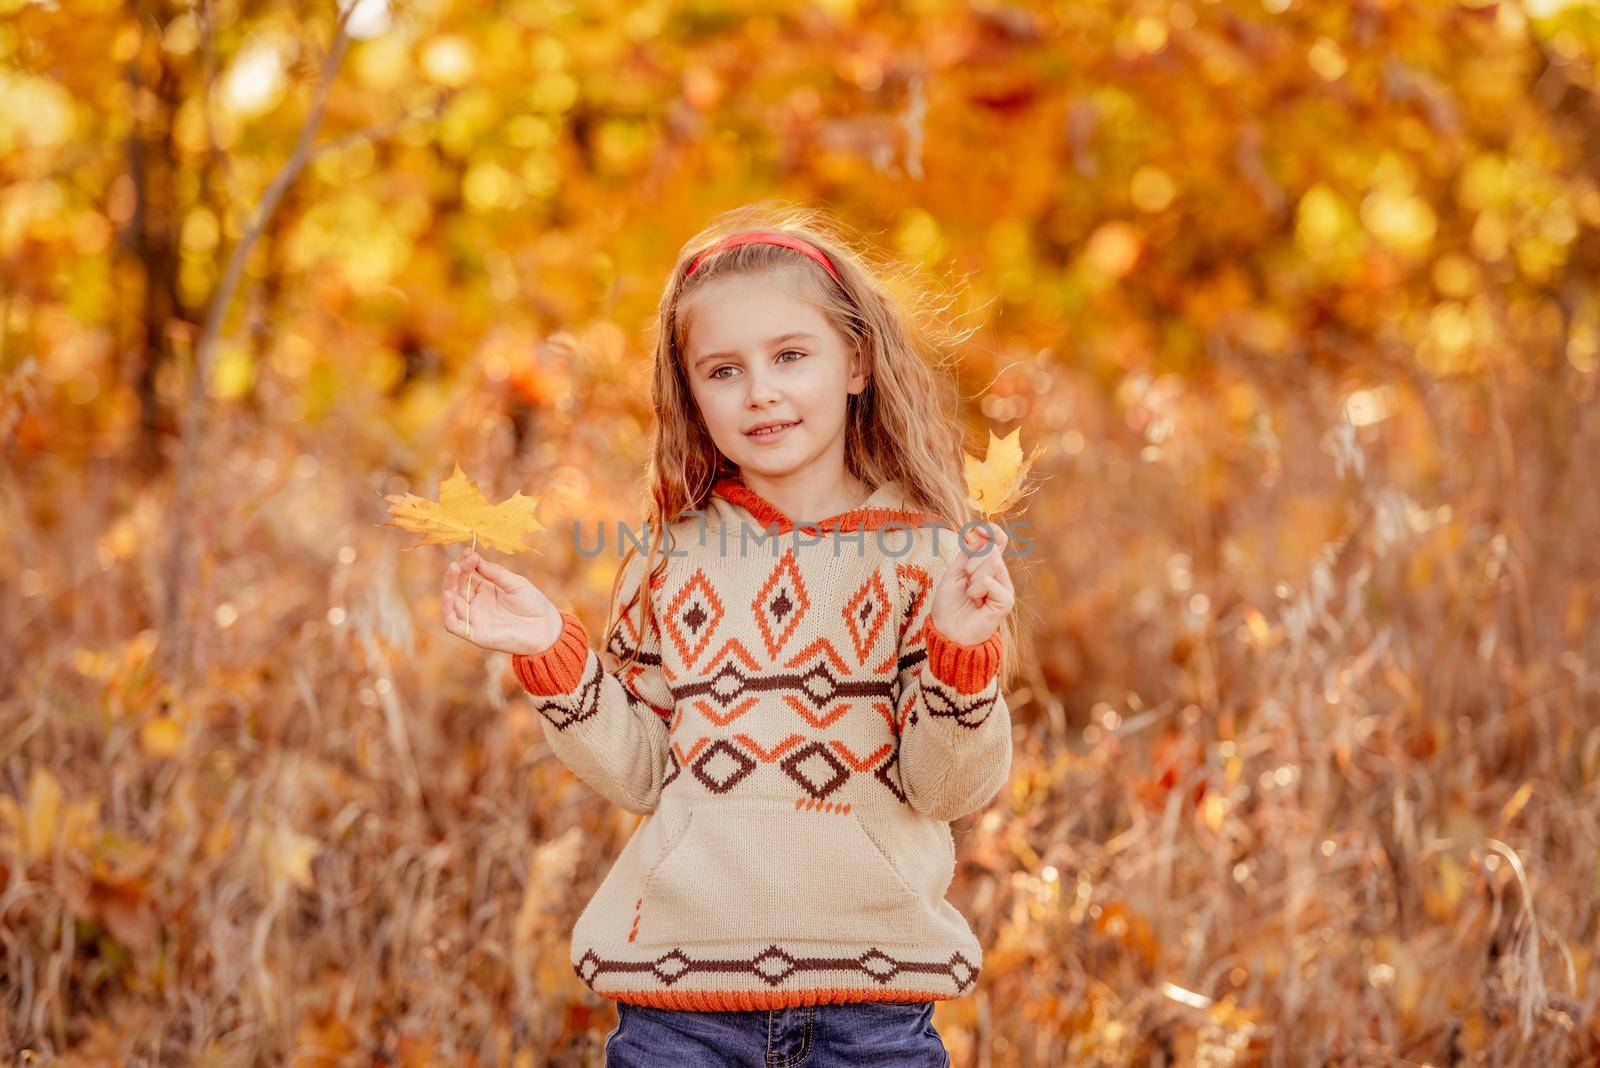 Cute girl holding yellow leaves by tan4ikk1